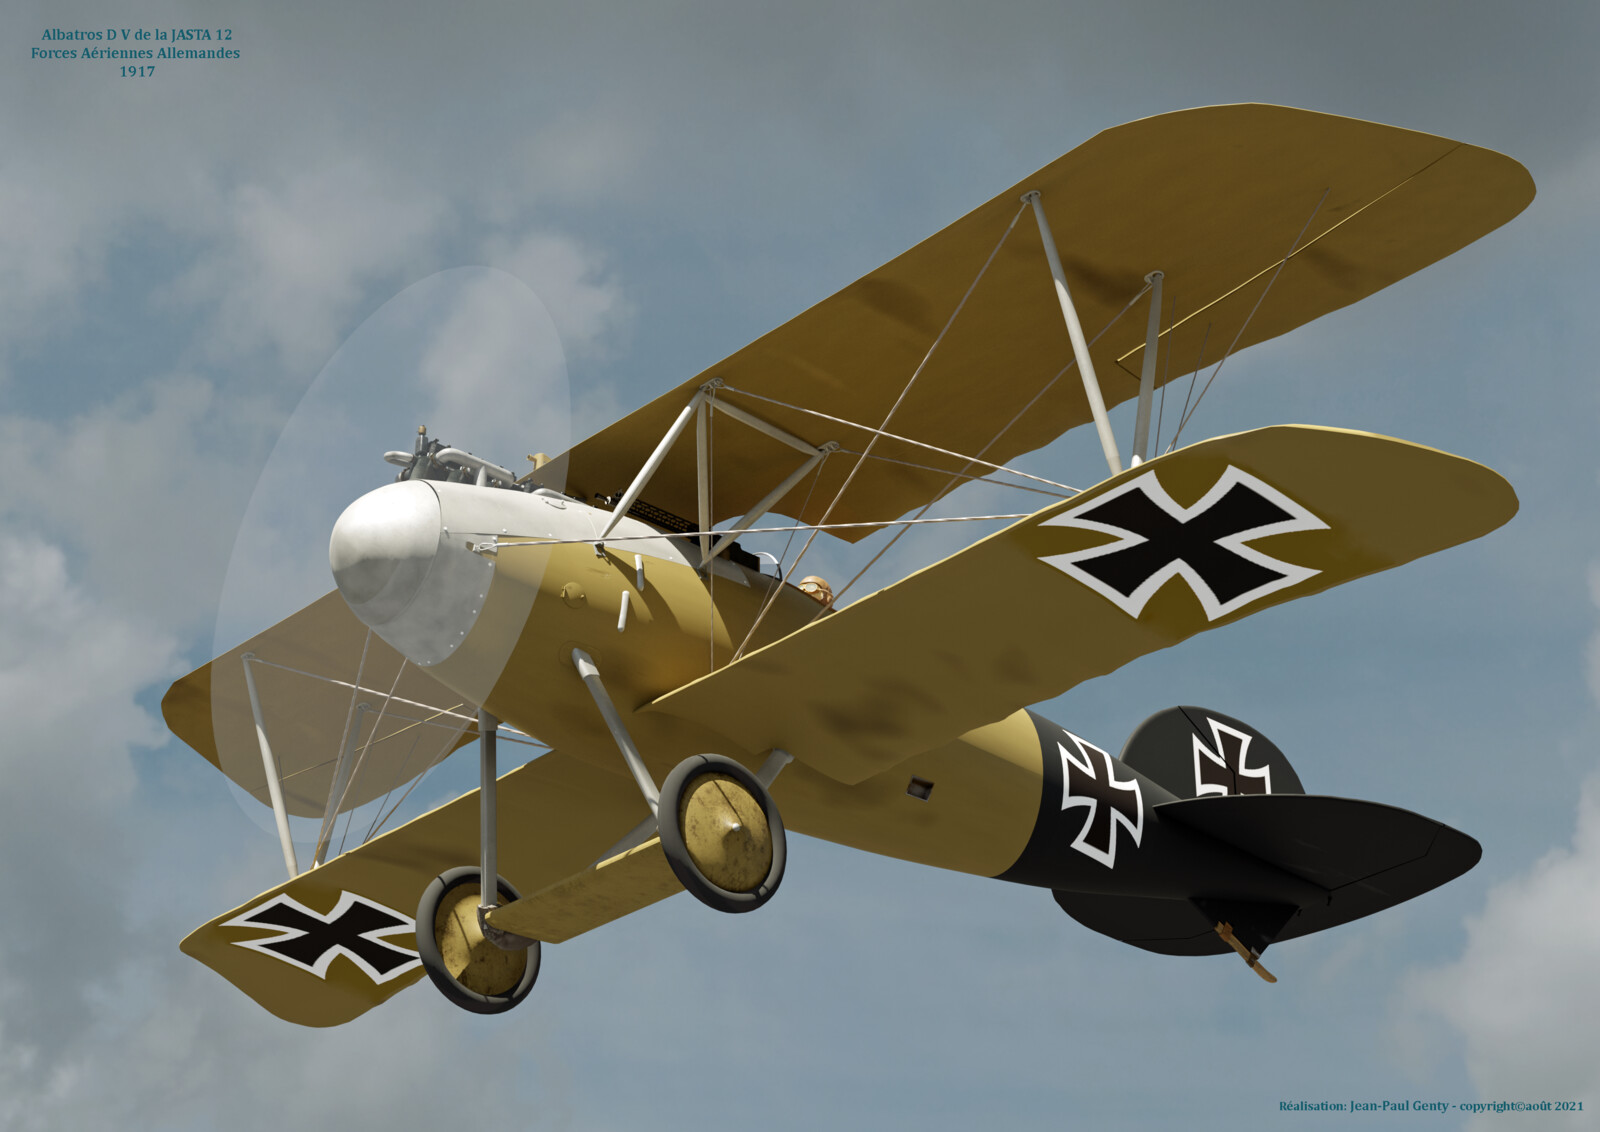 Albatros D V de la JASTA 12 - forces aériennes allemandes - 1917
Blender 2.93.1 - cycle 1024 samples